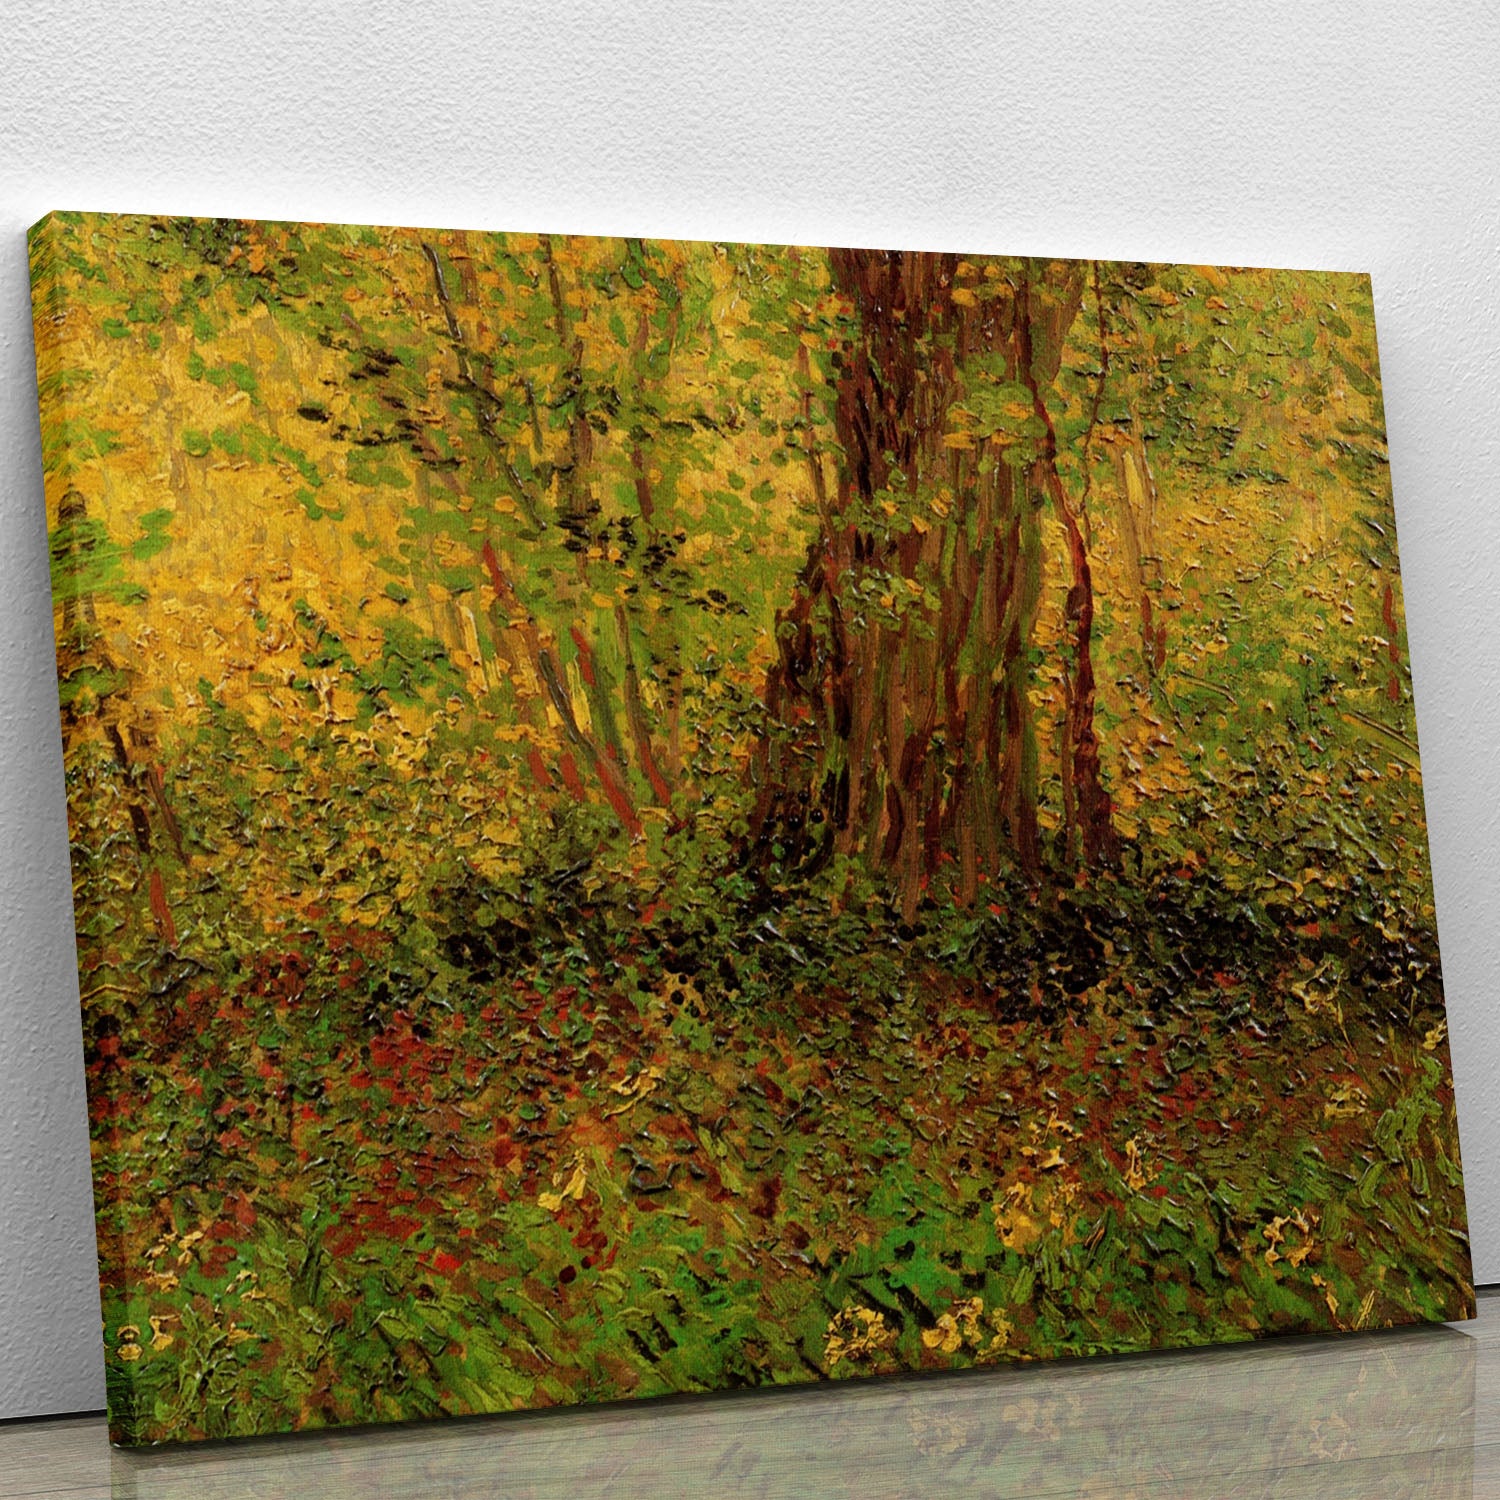 Undergrowth 2 by Van Gogh Canvas Print or Poster - Canvas Art Rocks - 1